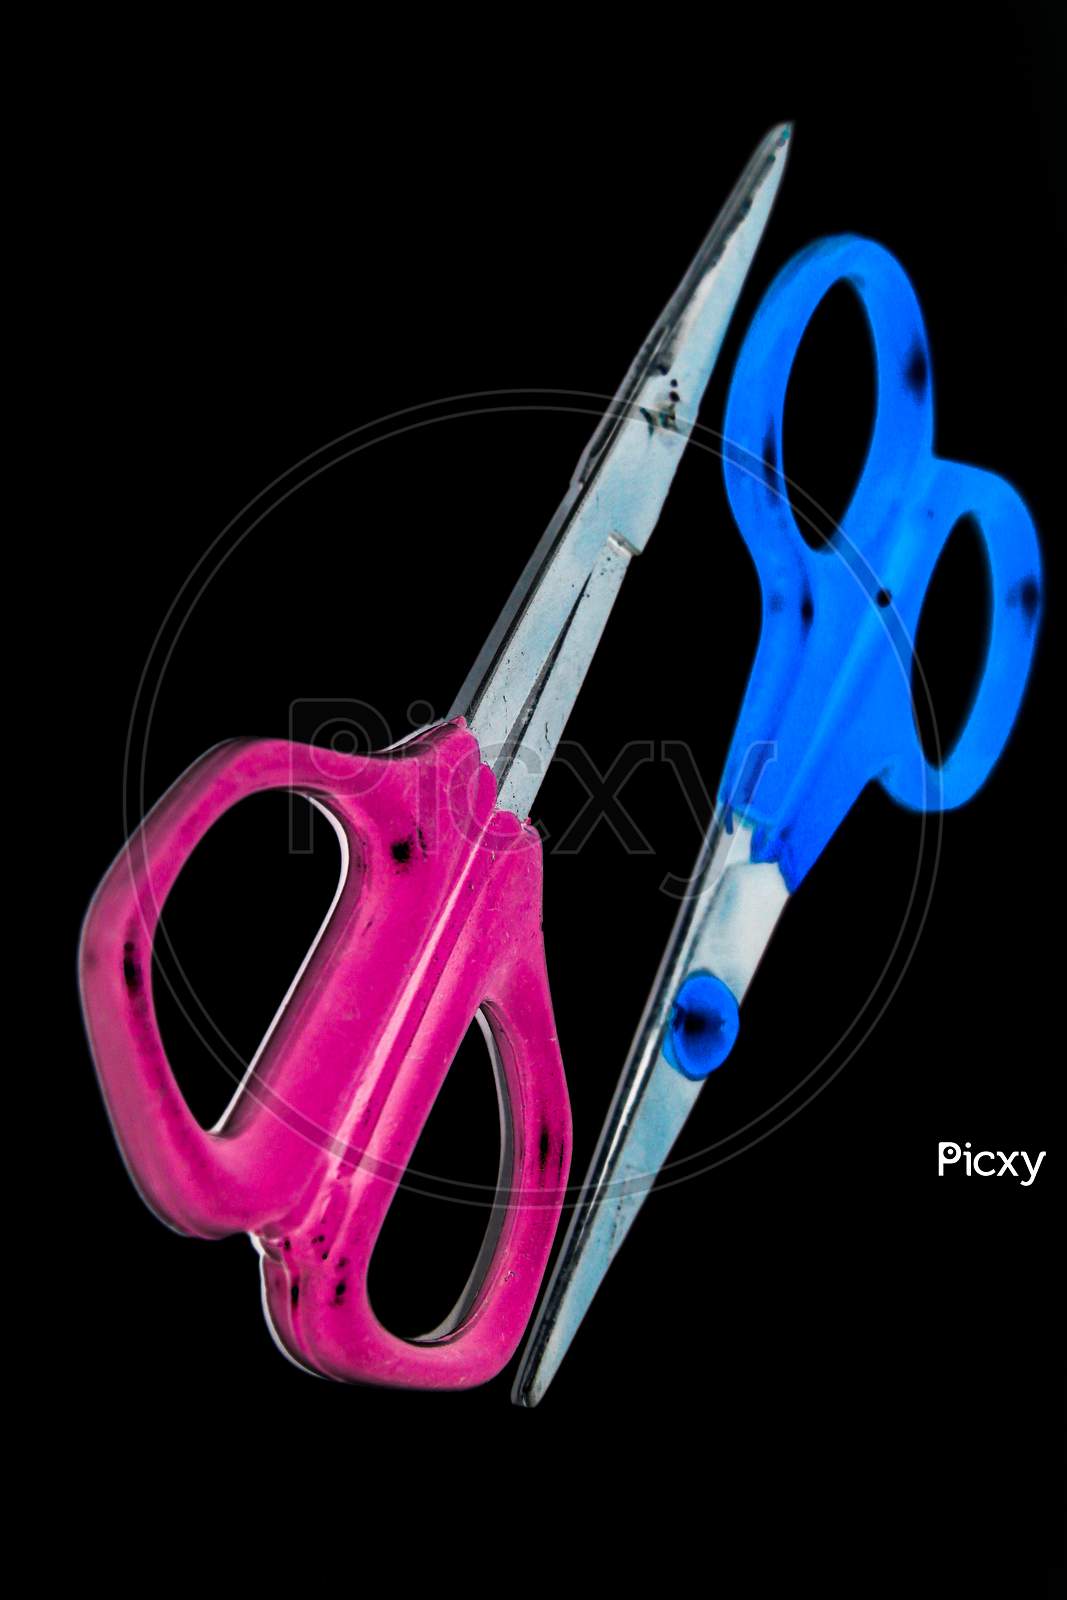 A picture of scissors